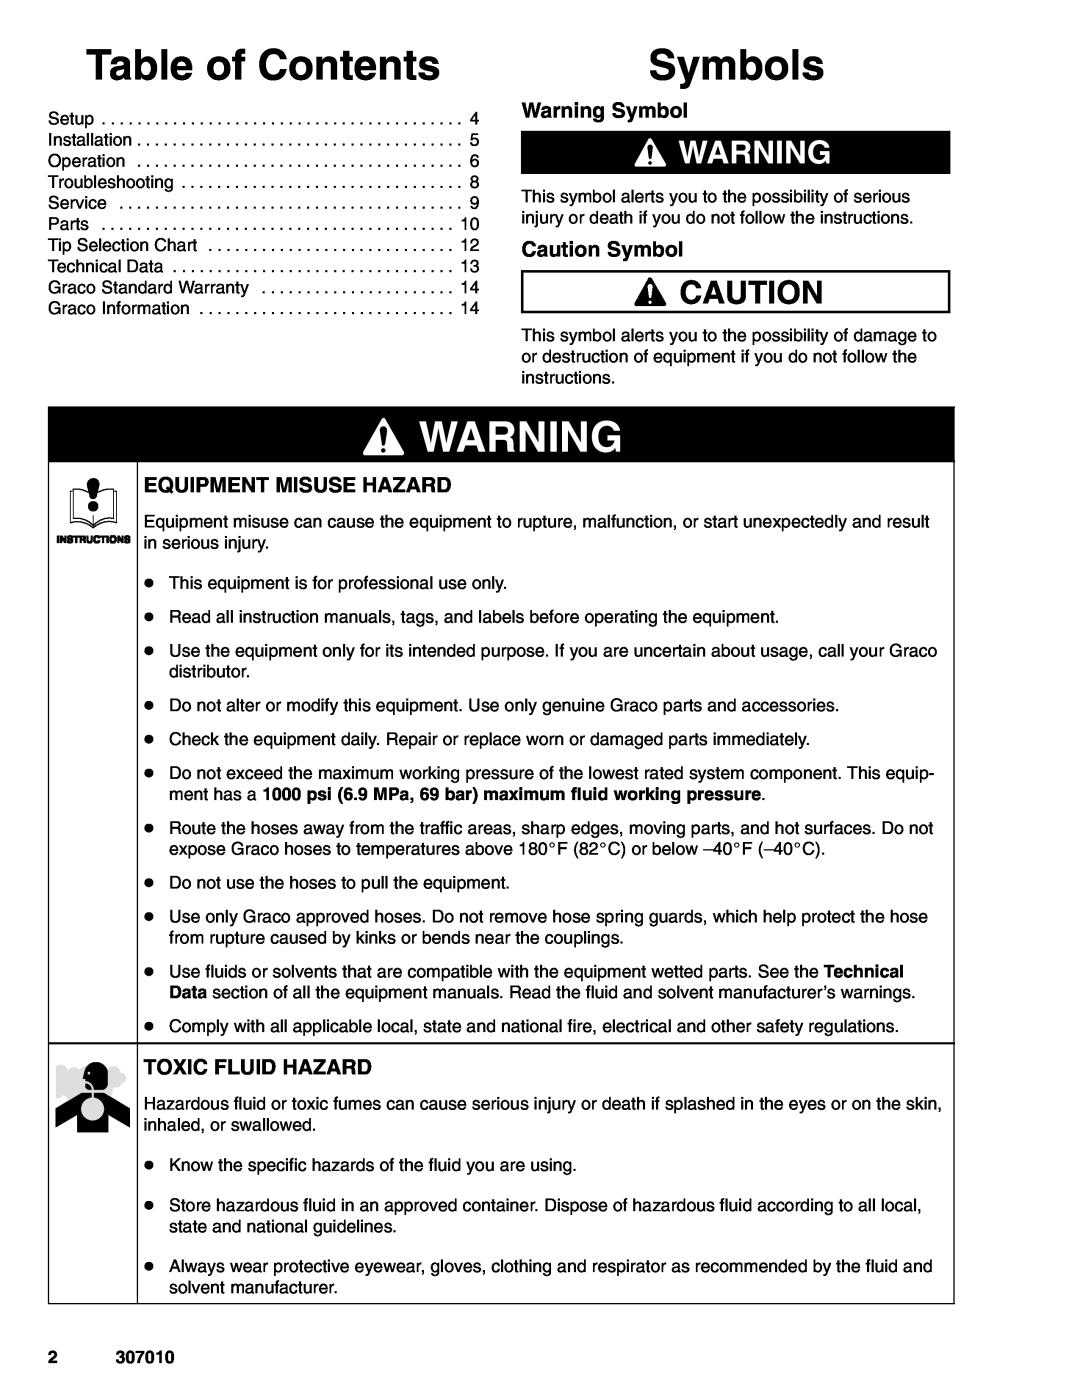 Graco Inc 307010L Table of Contents, Symbols, Warning Symbol, Caution Symbol, Equipment Misuse Hazard, Toxic Fluid Hazard 